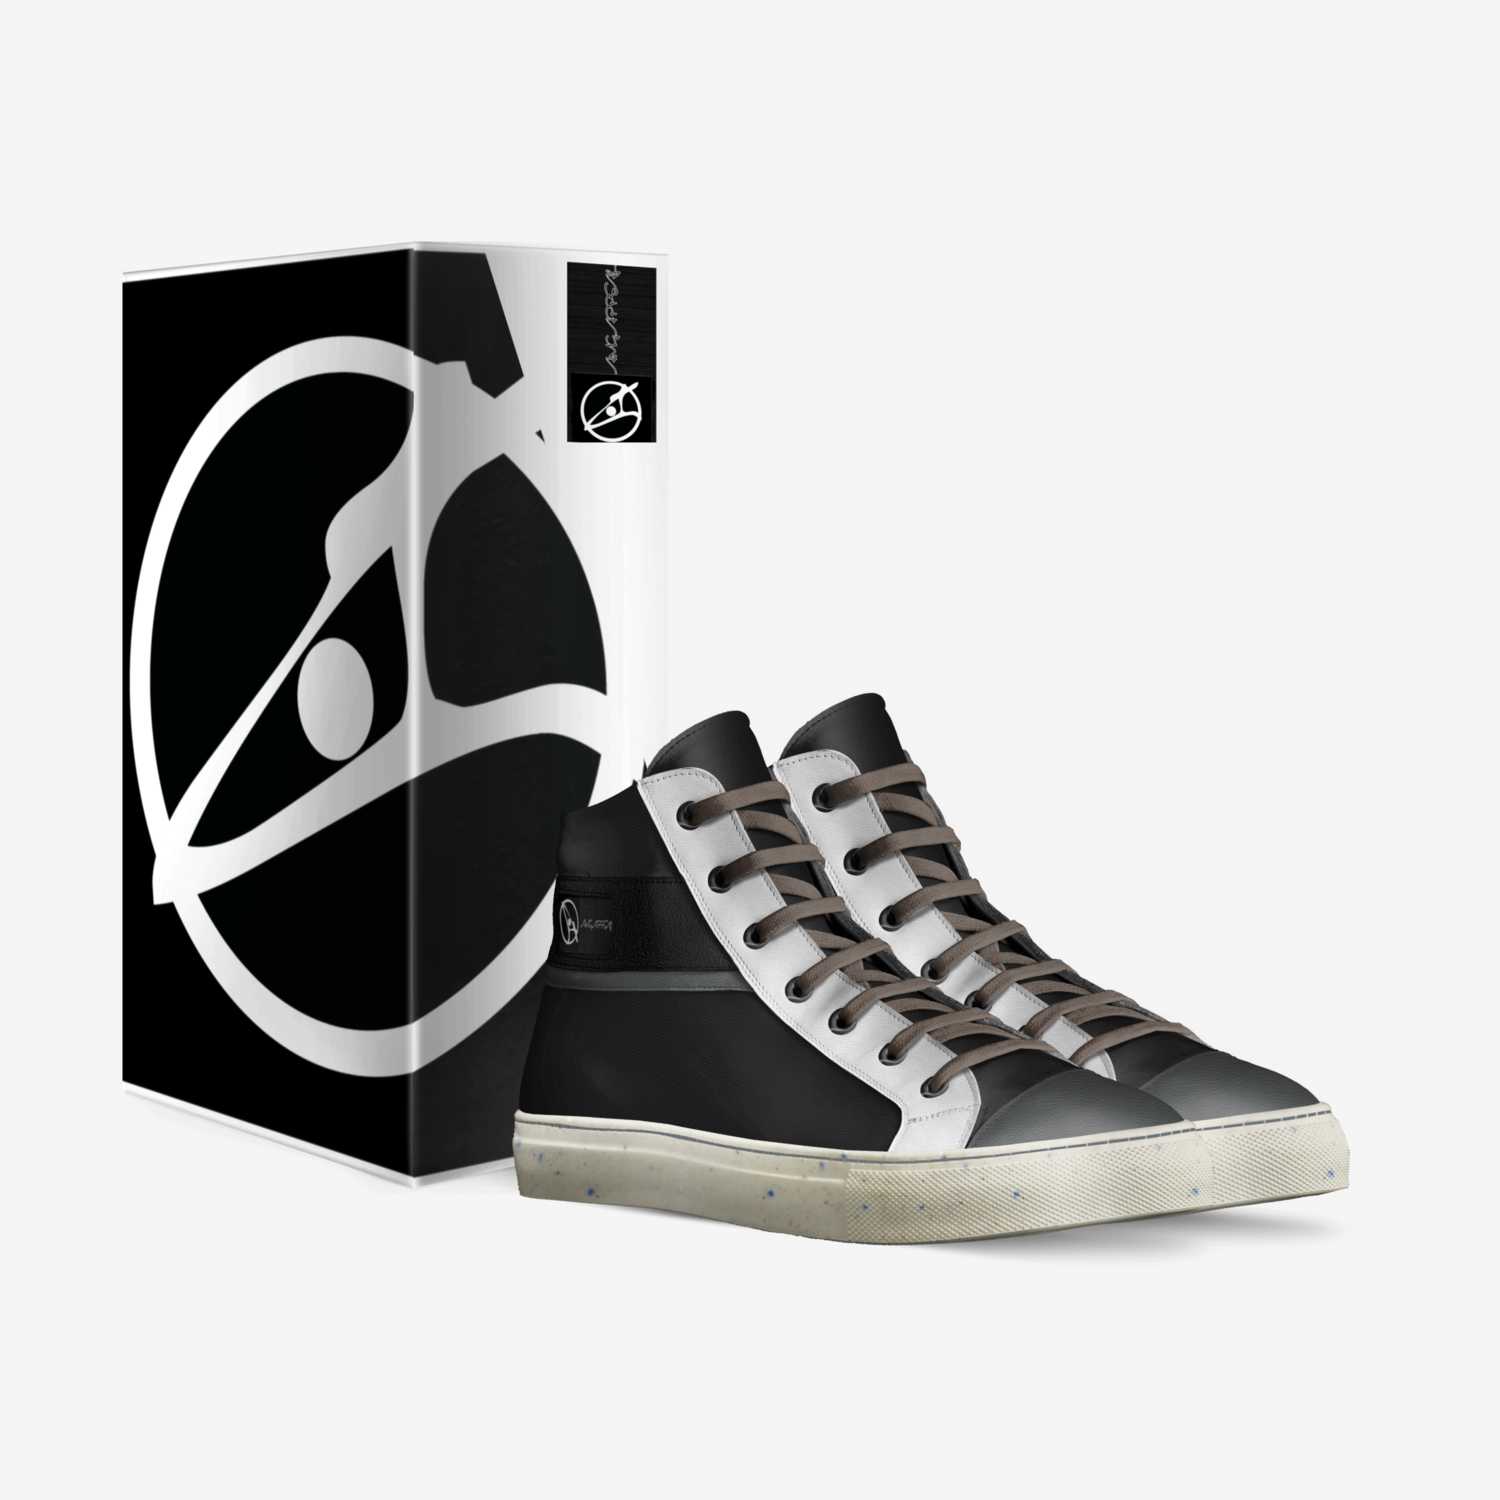 Oreos custom made in Italy shoes by Darrell Dargan | Box view